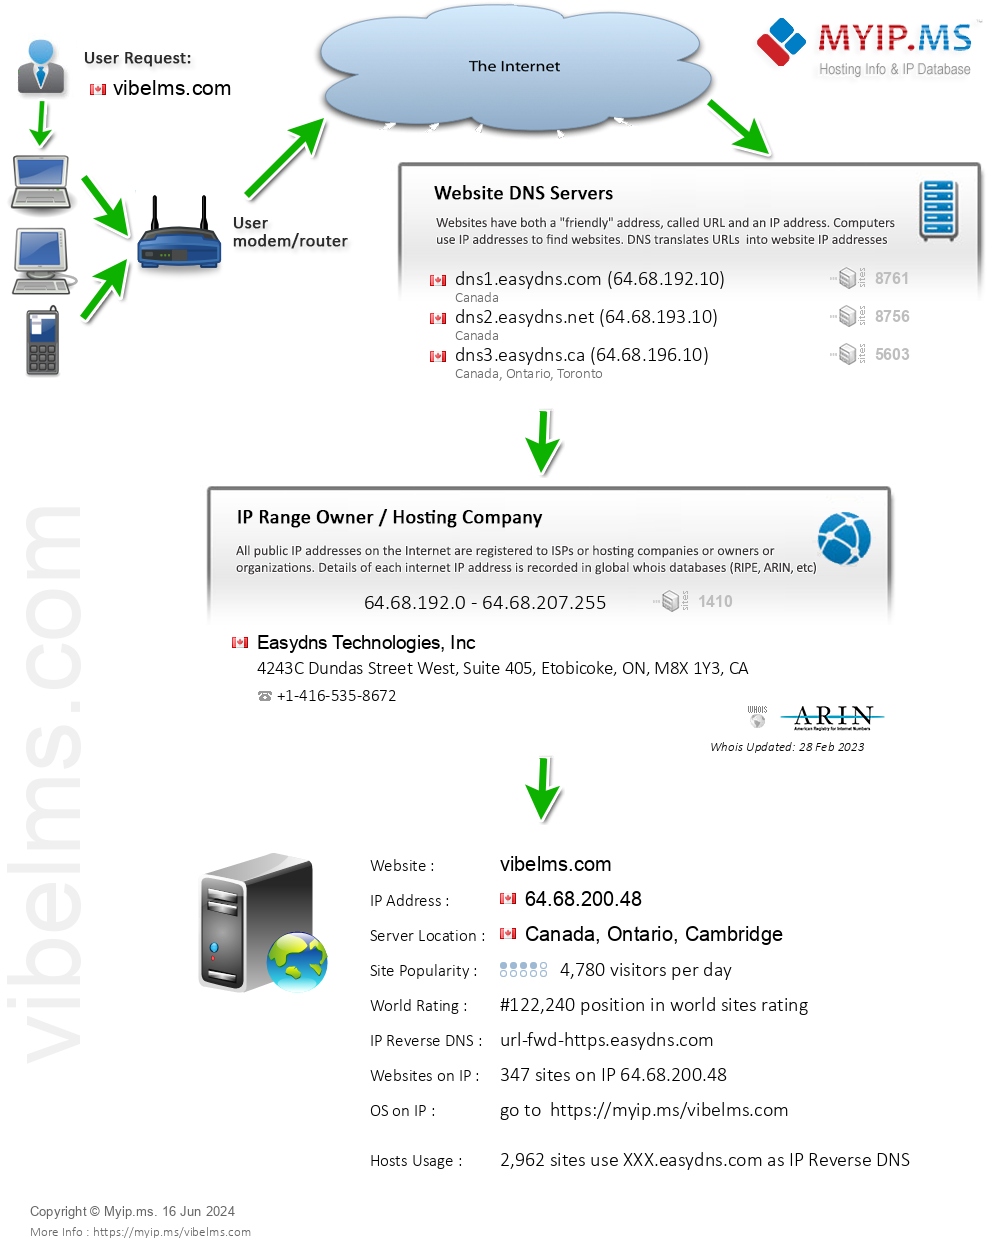 Vibelms.com - Website Hosting Visual IP Diagram